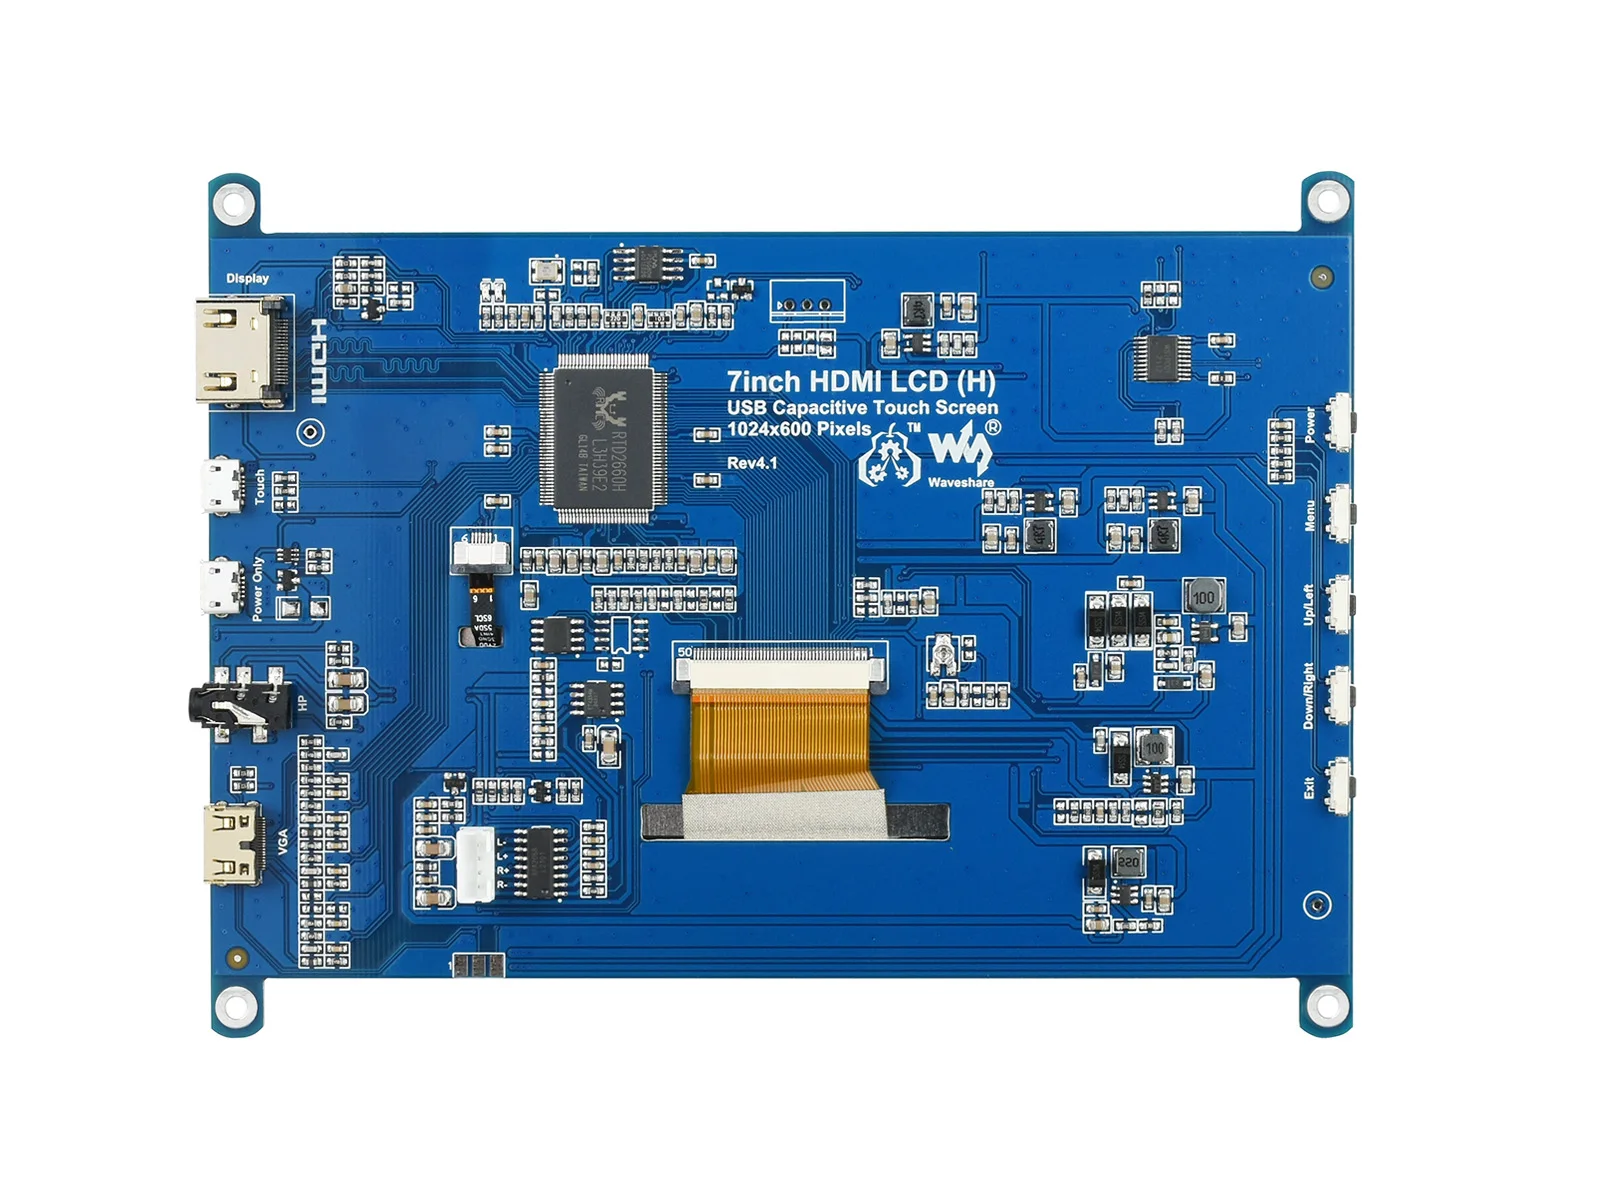 Waveshare 7 tommer HDMI LCD - (H) Computer Skærm 1024*600 IPS Kapacitiv Touch Skærm Understøtter Raspberry Pi Jetson Nano Win10 osv.